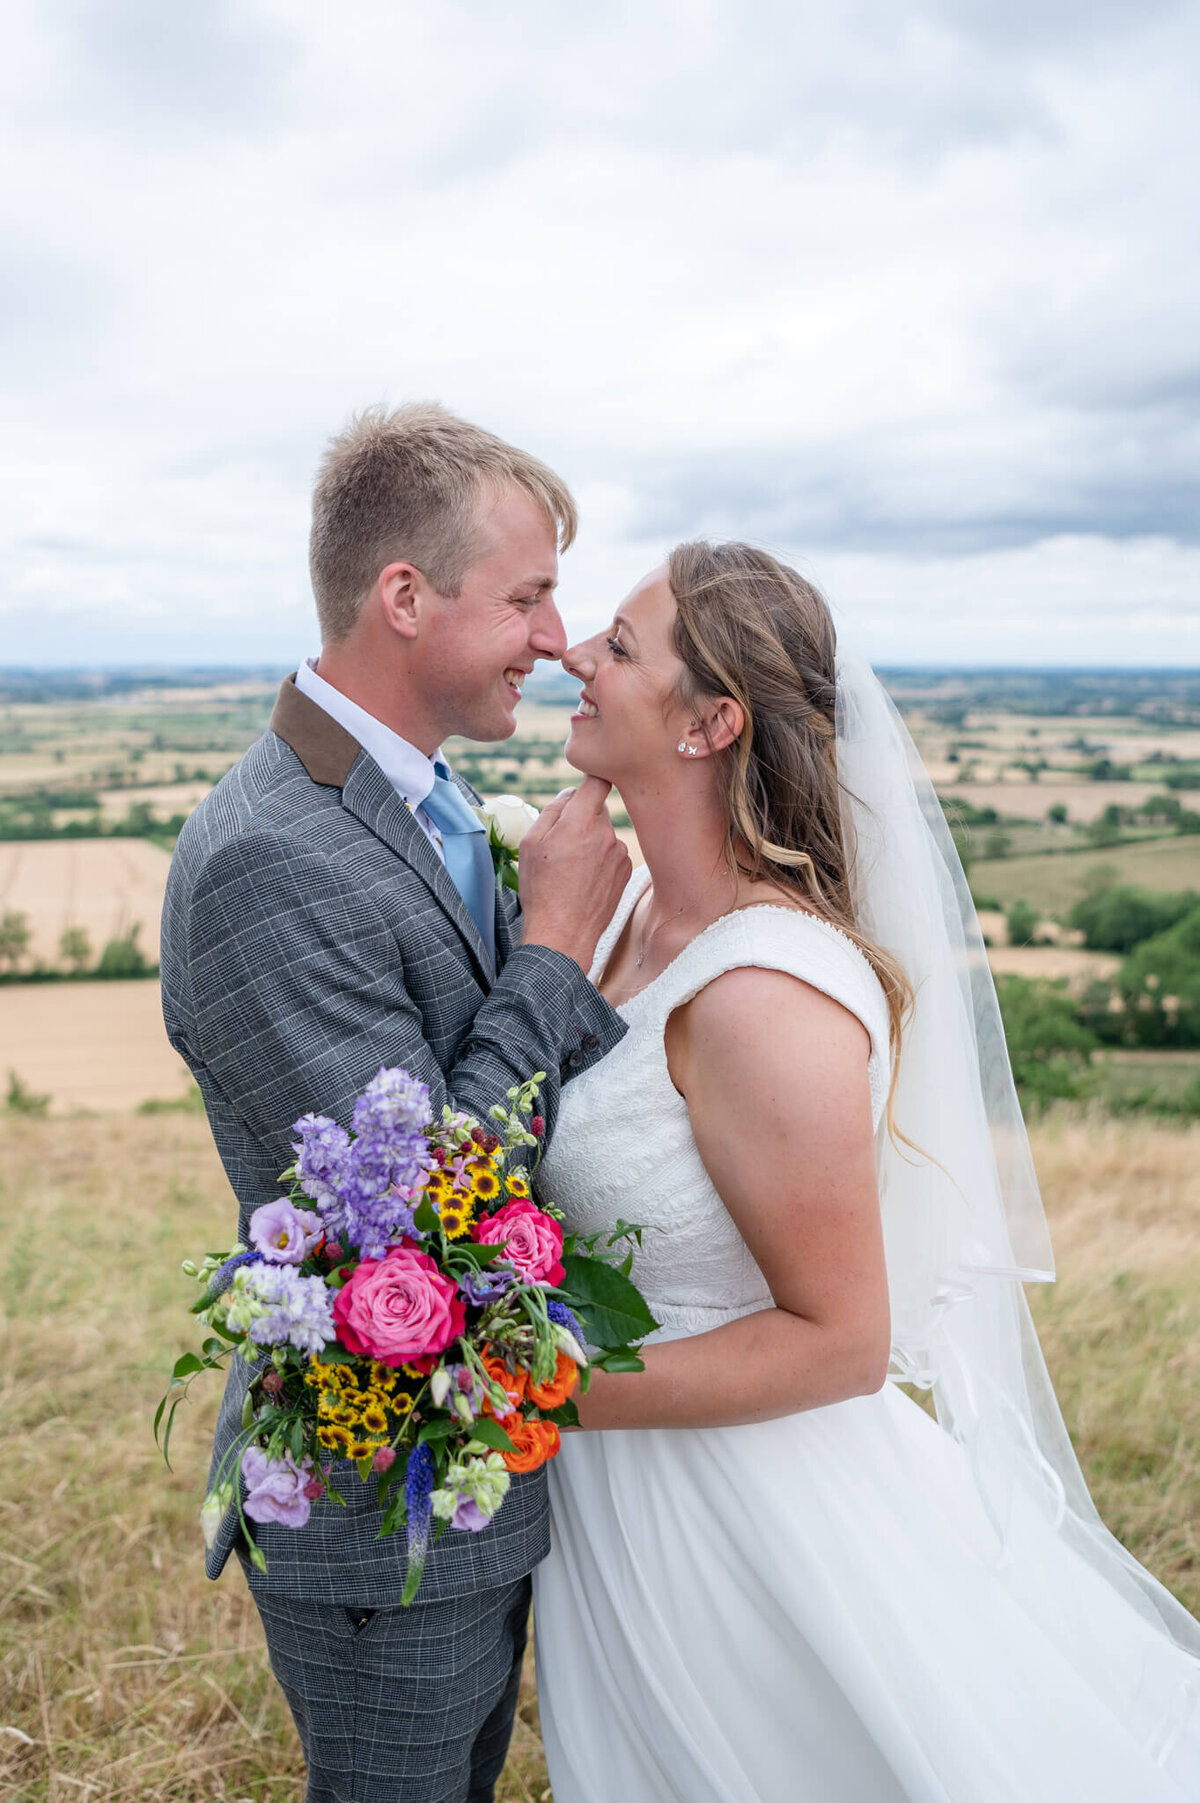 Chloe Bolam - Buckinghamshire Warwickshire UK Wedding Photographer - Marquee Outdoor Wedding - C & S - 23.07.22 -5